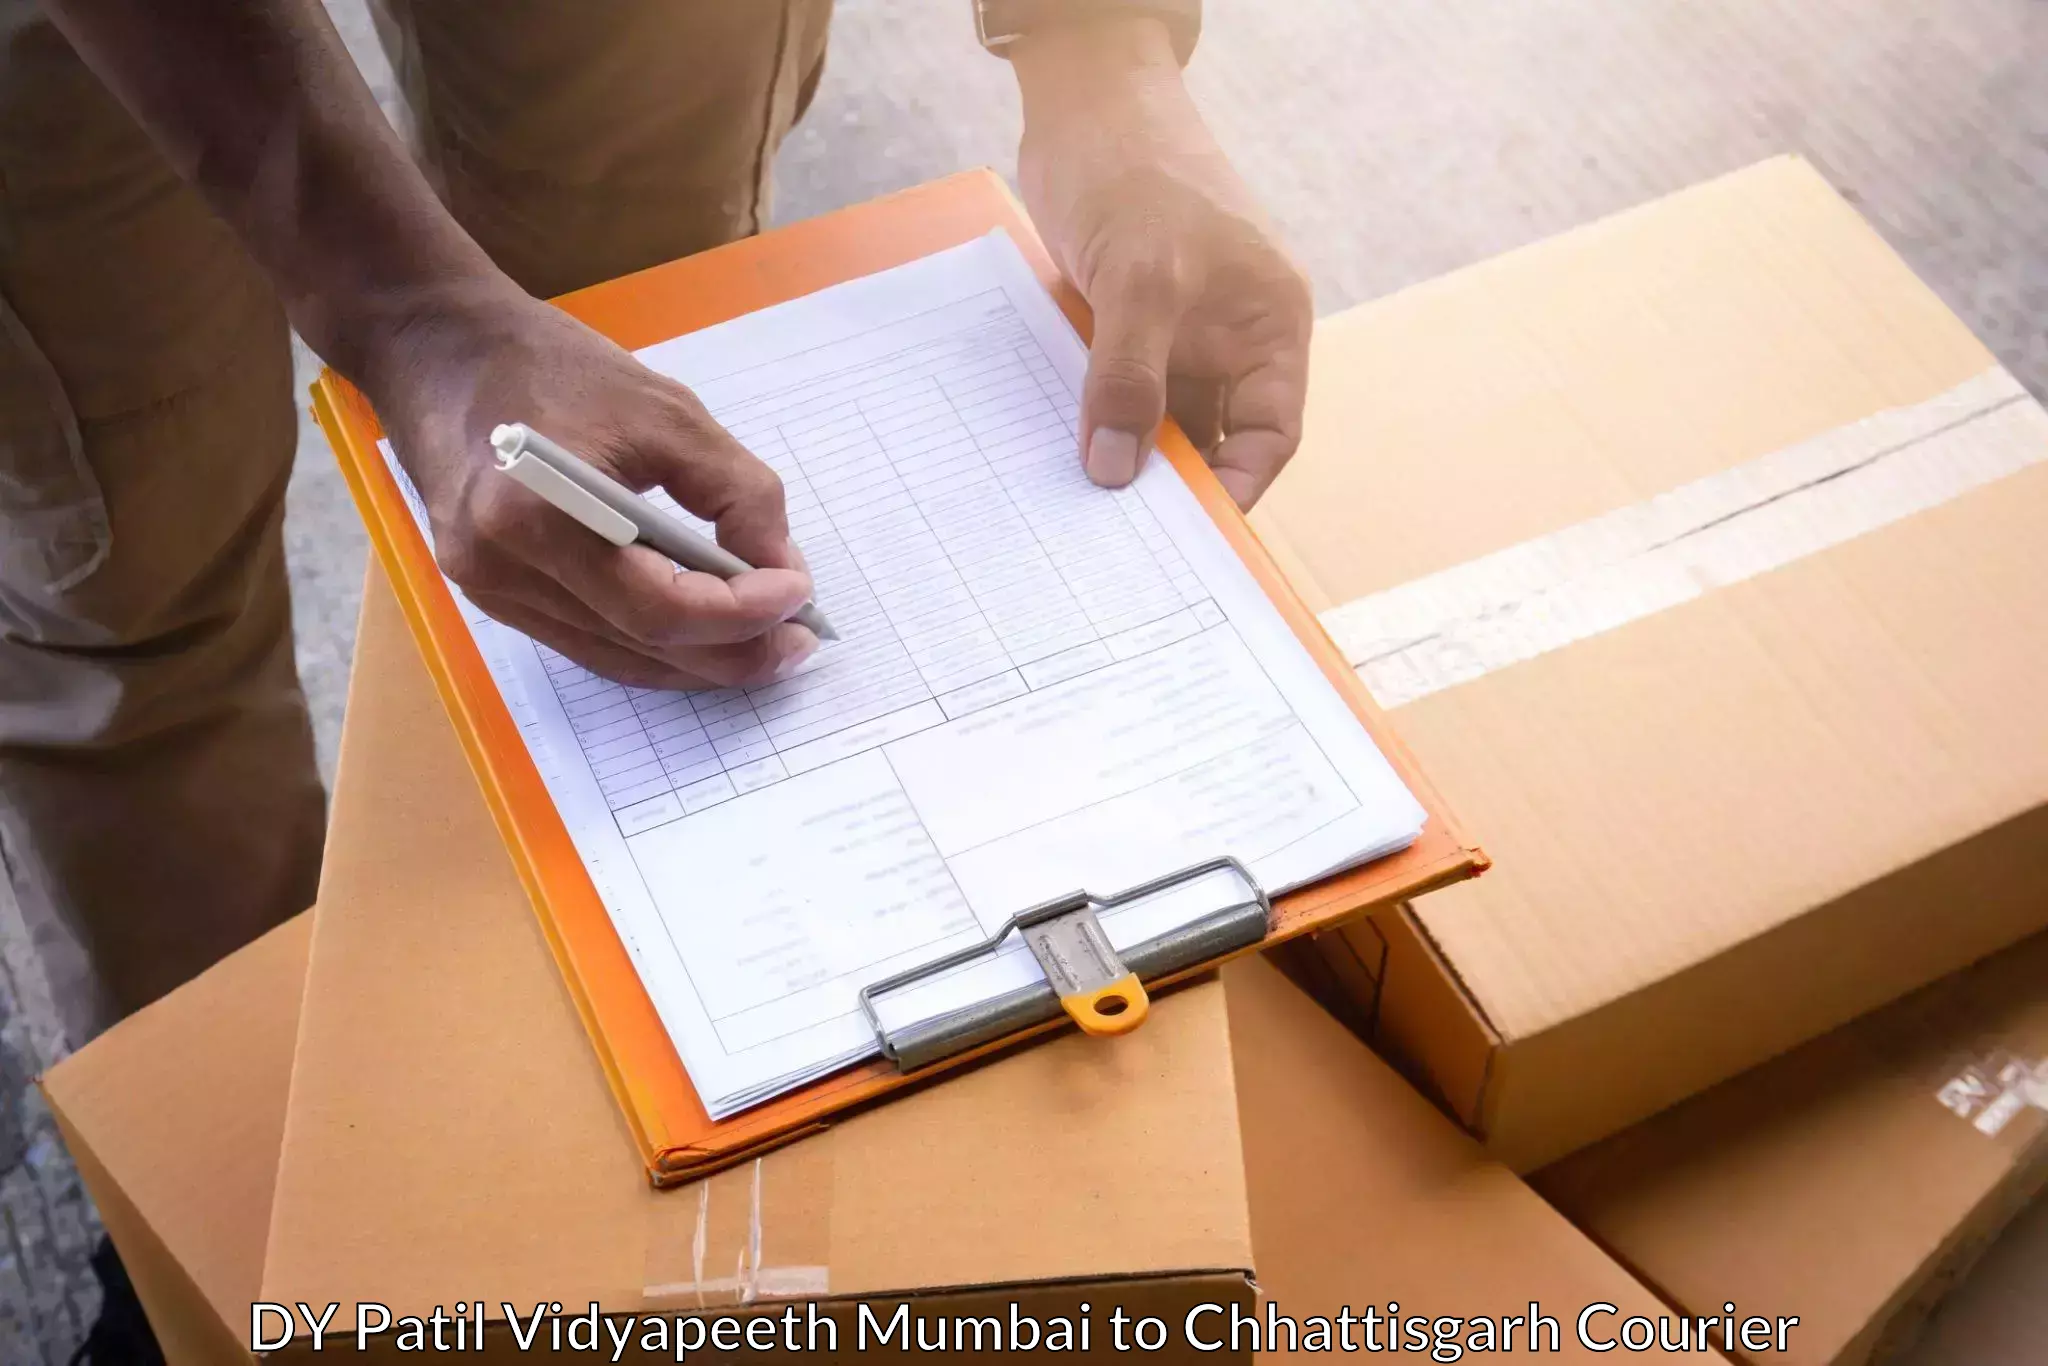 Express logistics service DY Patil Vidyapeeth Mumbai to Chhattisgarh